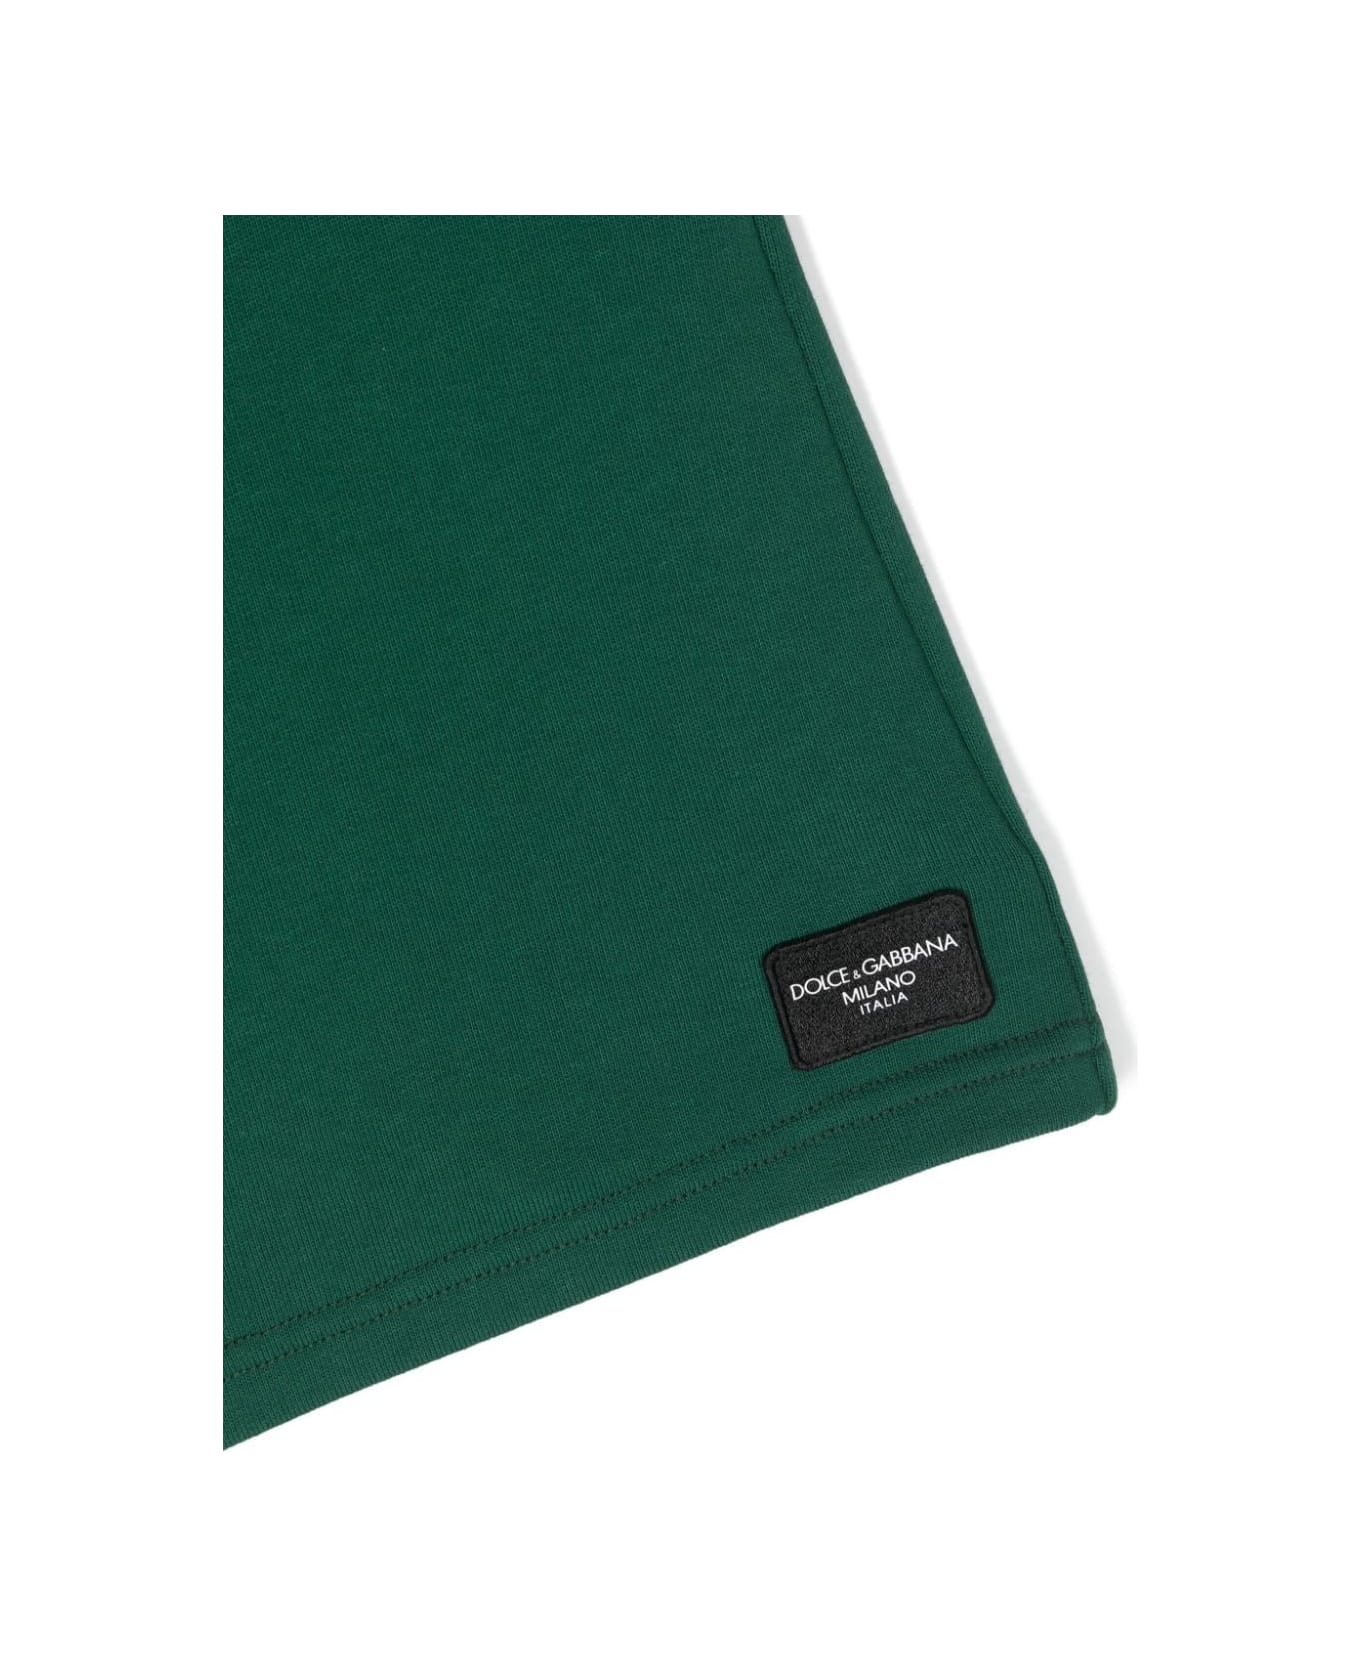 Dolce & Gabbana Green Jersey Bermuda Shorts With Logo Plaque - Green